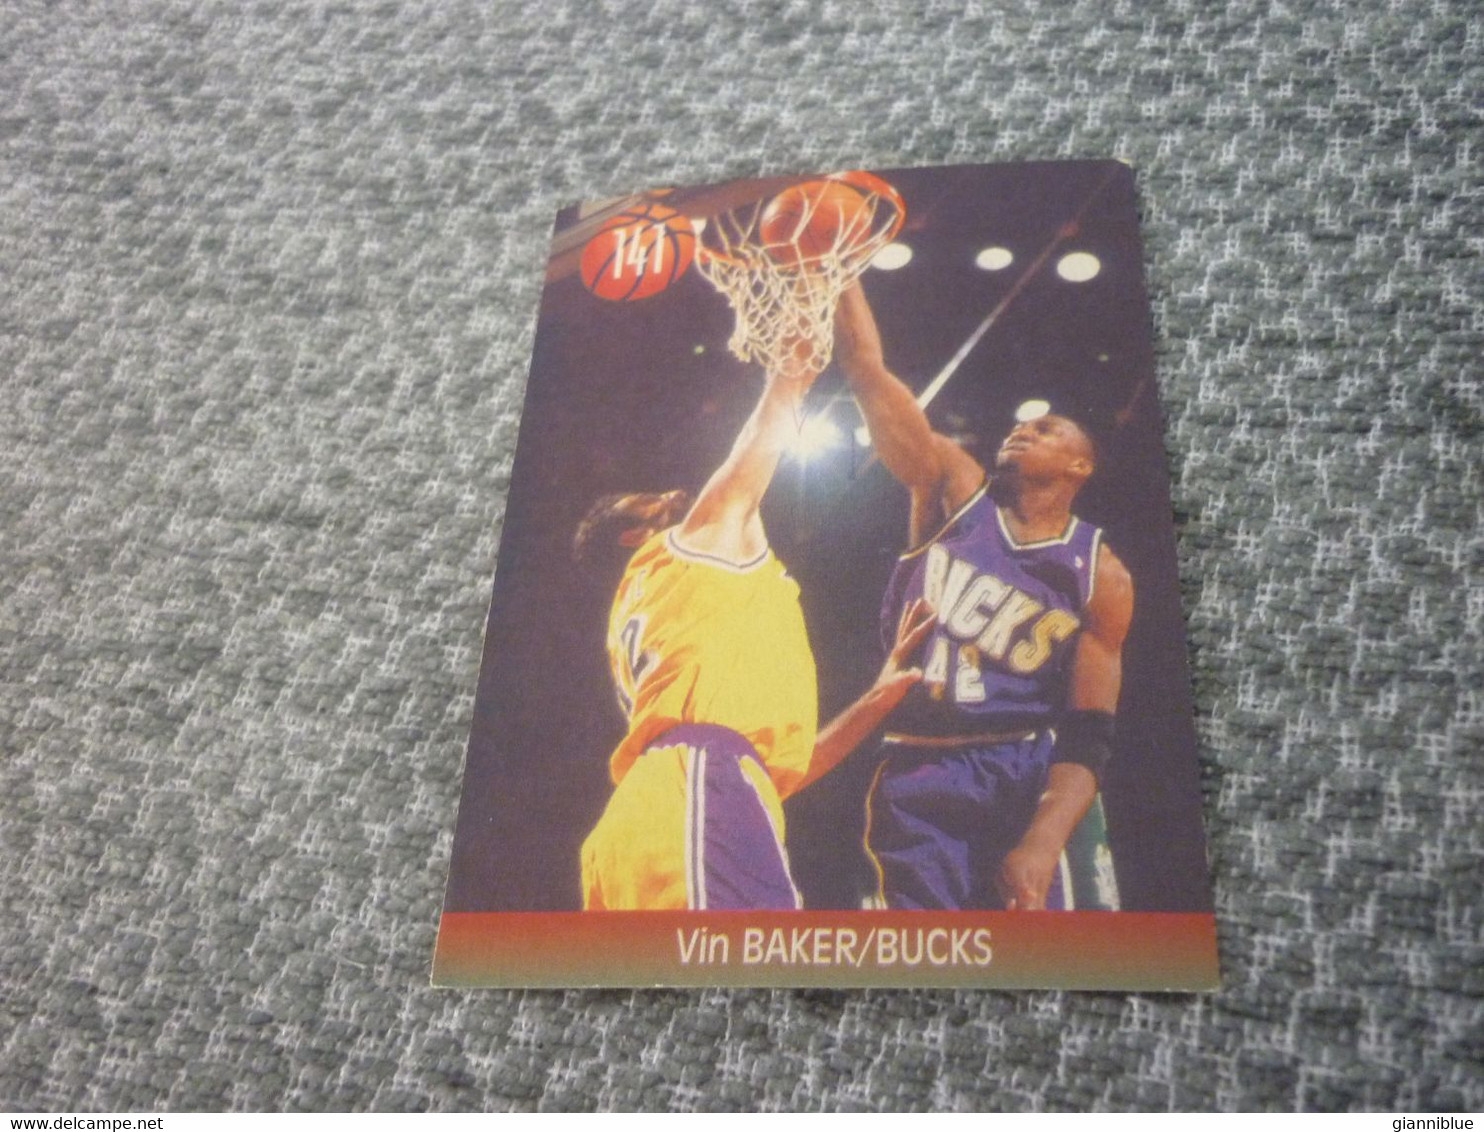 Vin Baker Milwaukee Bucks American USA NBA Basketball Rare Greek Edition Card - 1990-1999